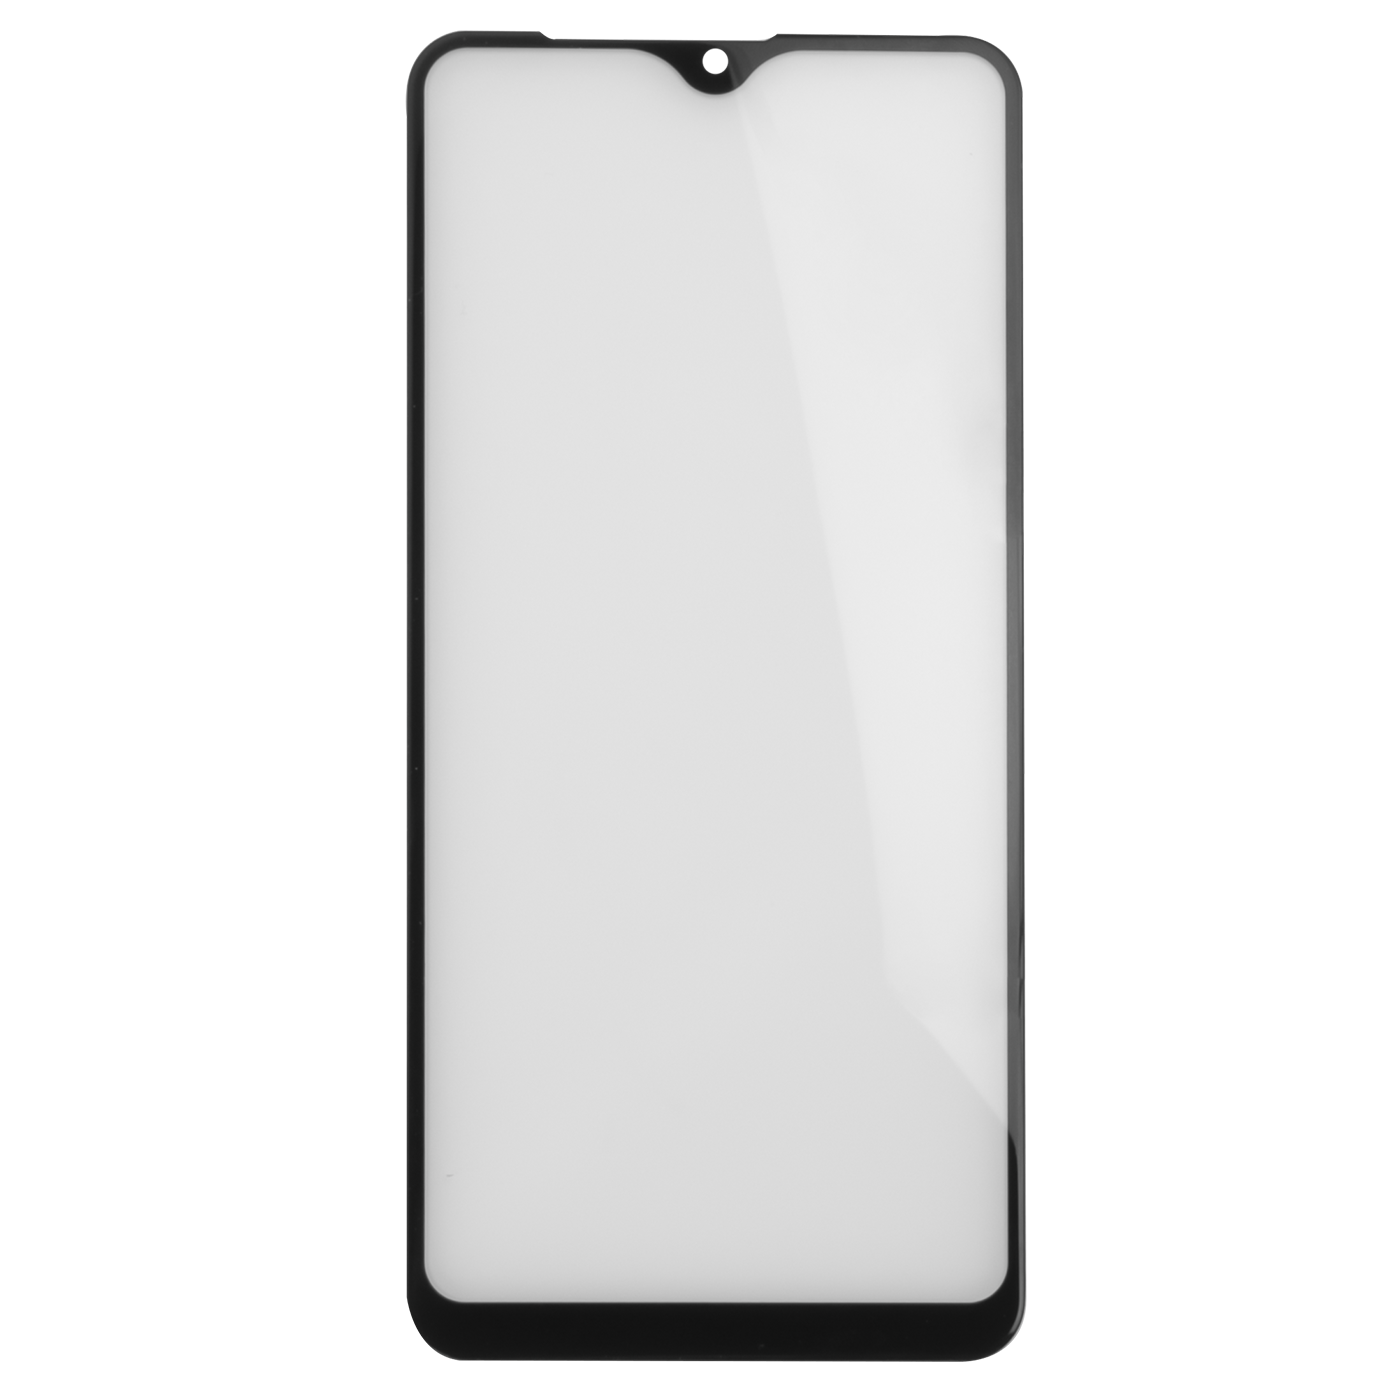 Защитный экран Samsung Galaxy A10s Full Screen (3D) tempered glass FULL GLUE